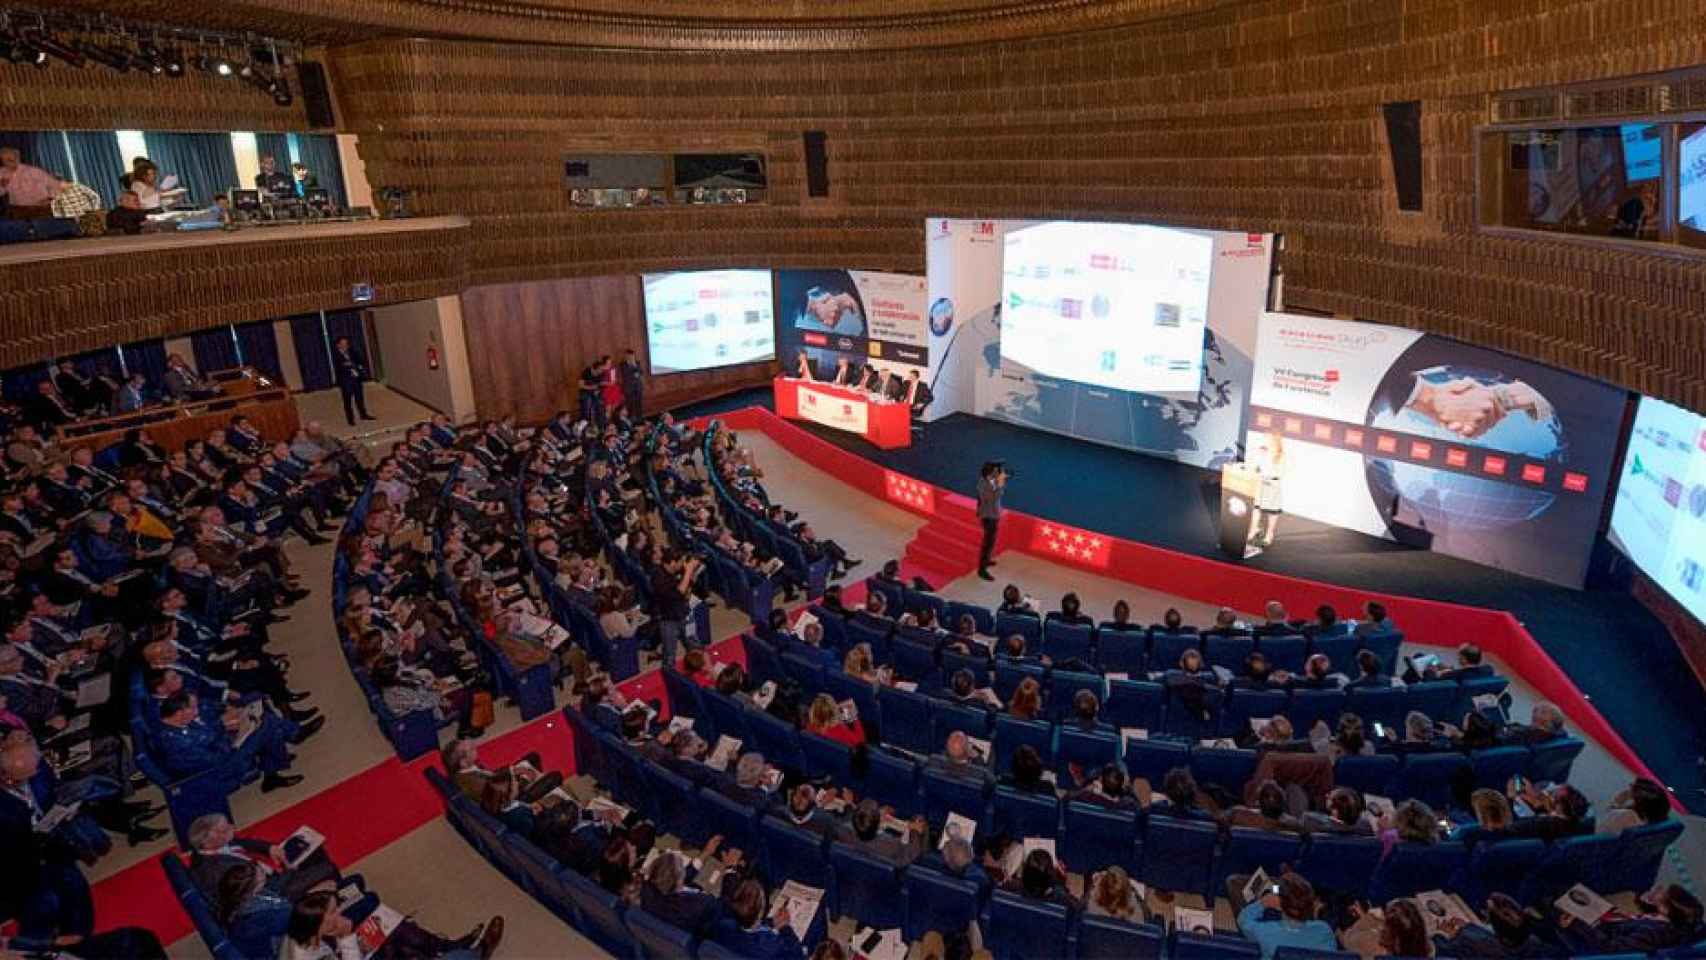 Congreso Internacional de Excelencia / MADRID EXCELENTE